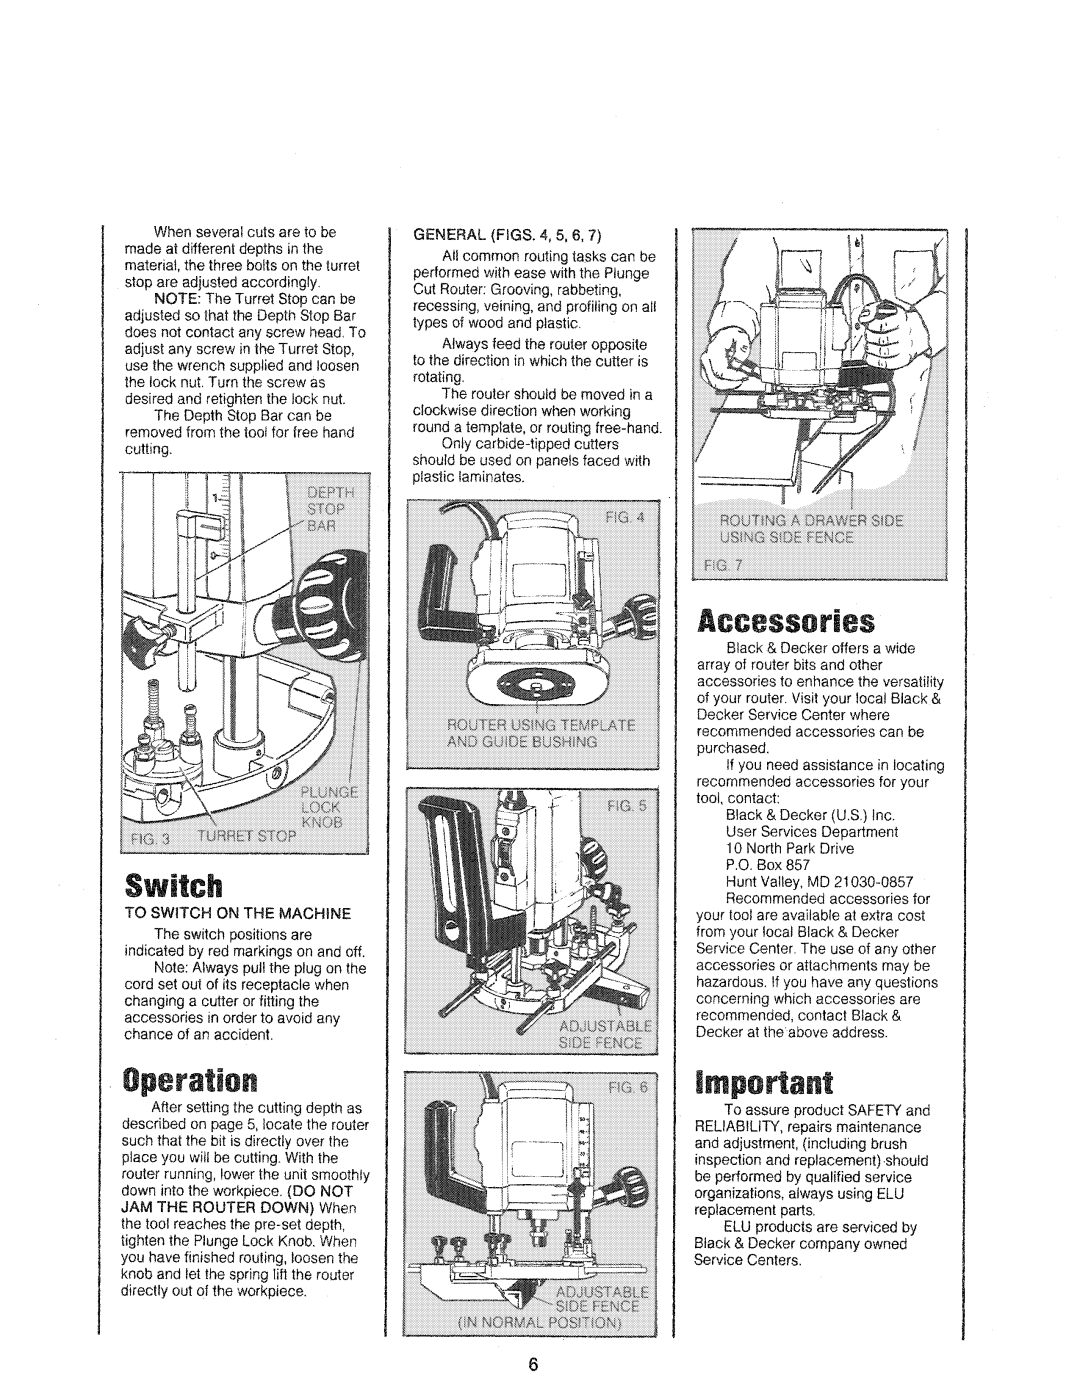 Black & Decker 3303, 3304 manual 